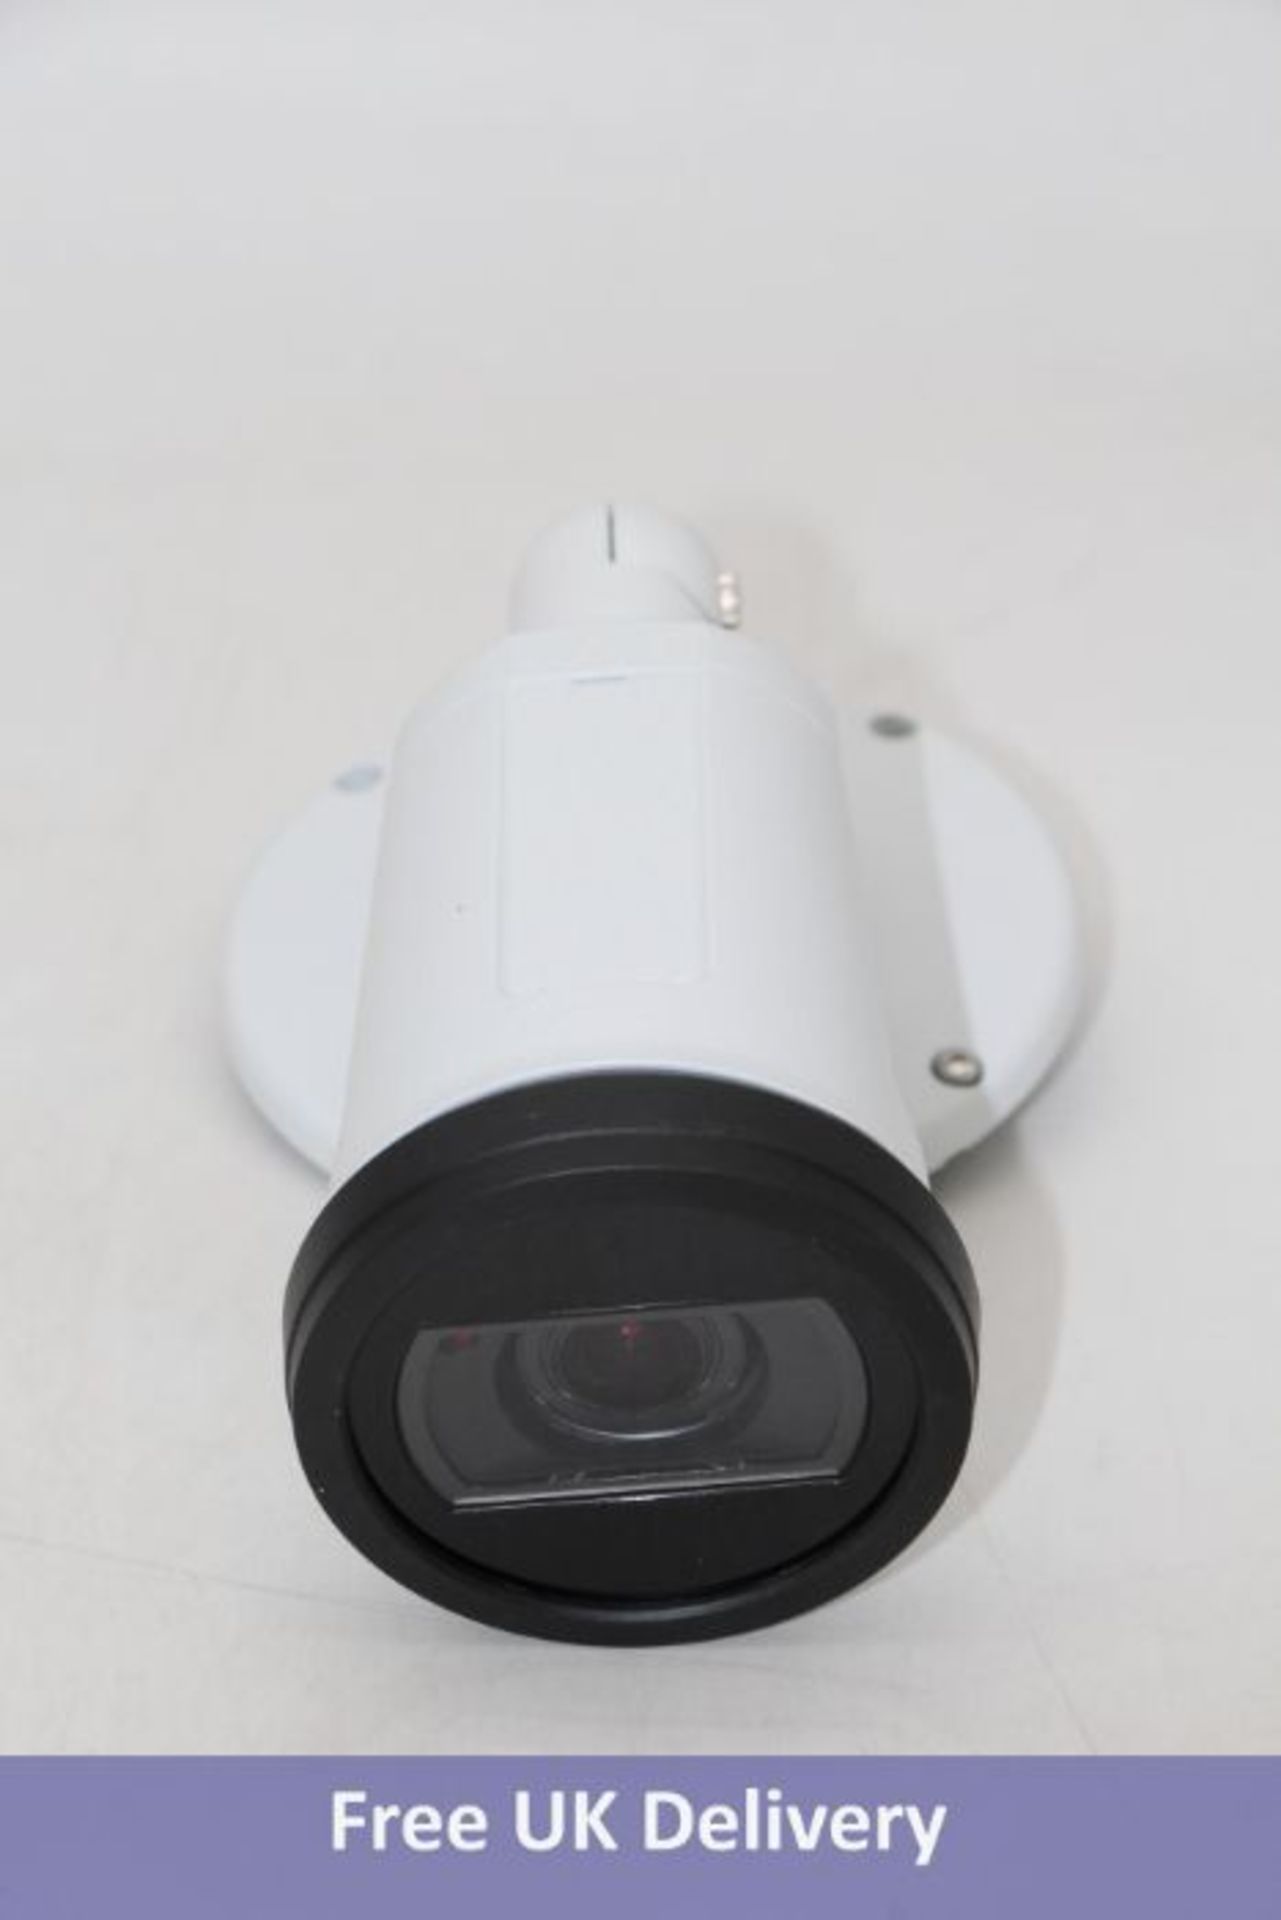 AXIS P1405-LE MK II 2MP Outdoor Bullet IP Security Camera